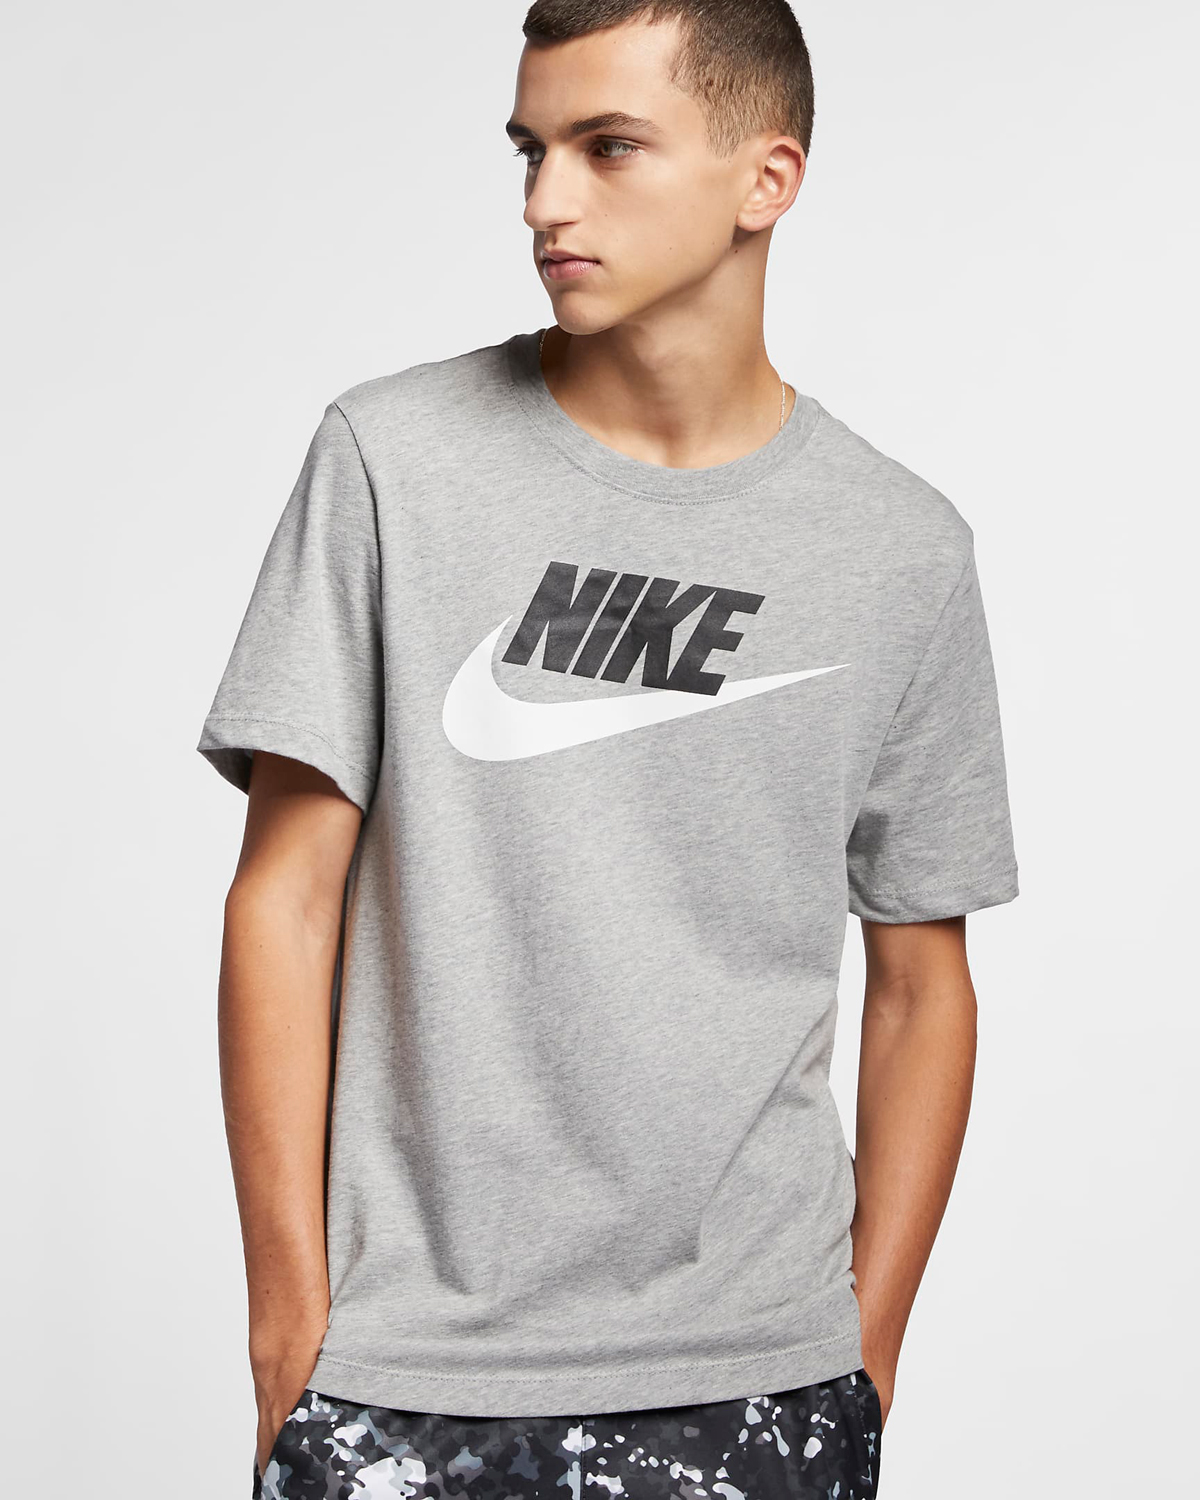 Nike-Sportswear-Logo-T-Shirt-Grey-Black-White